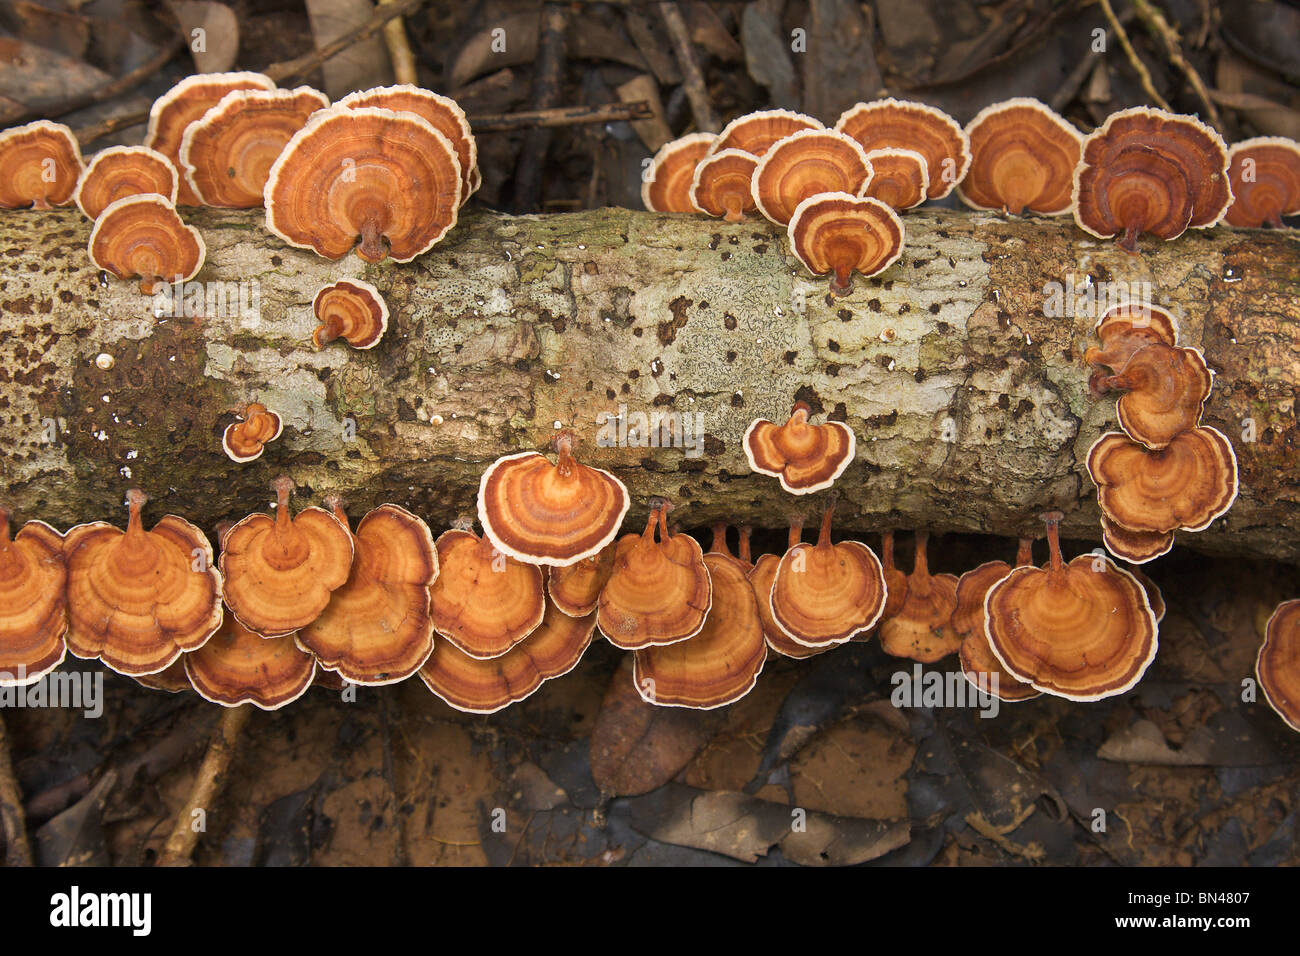 bracket fungi on dead tree-trunk in rain-forest, Borneo Stock Photo